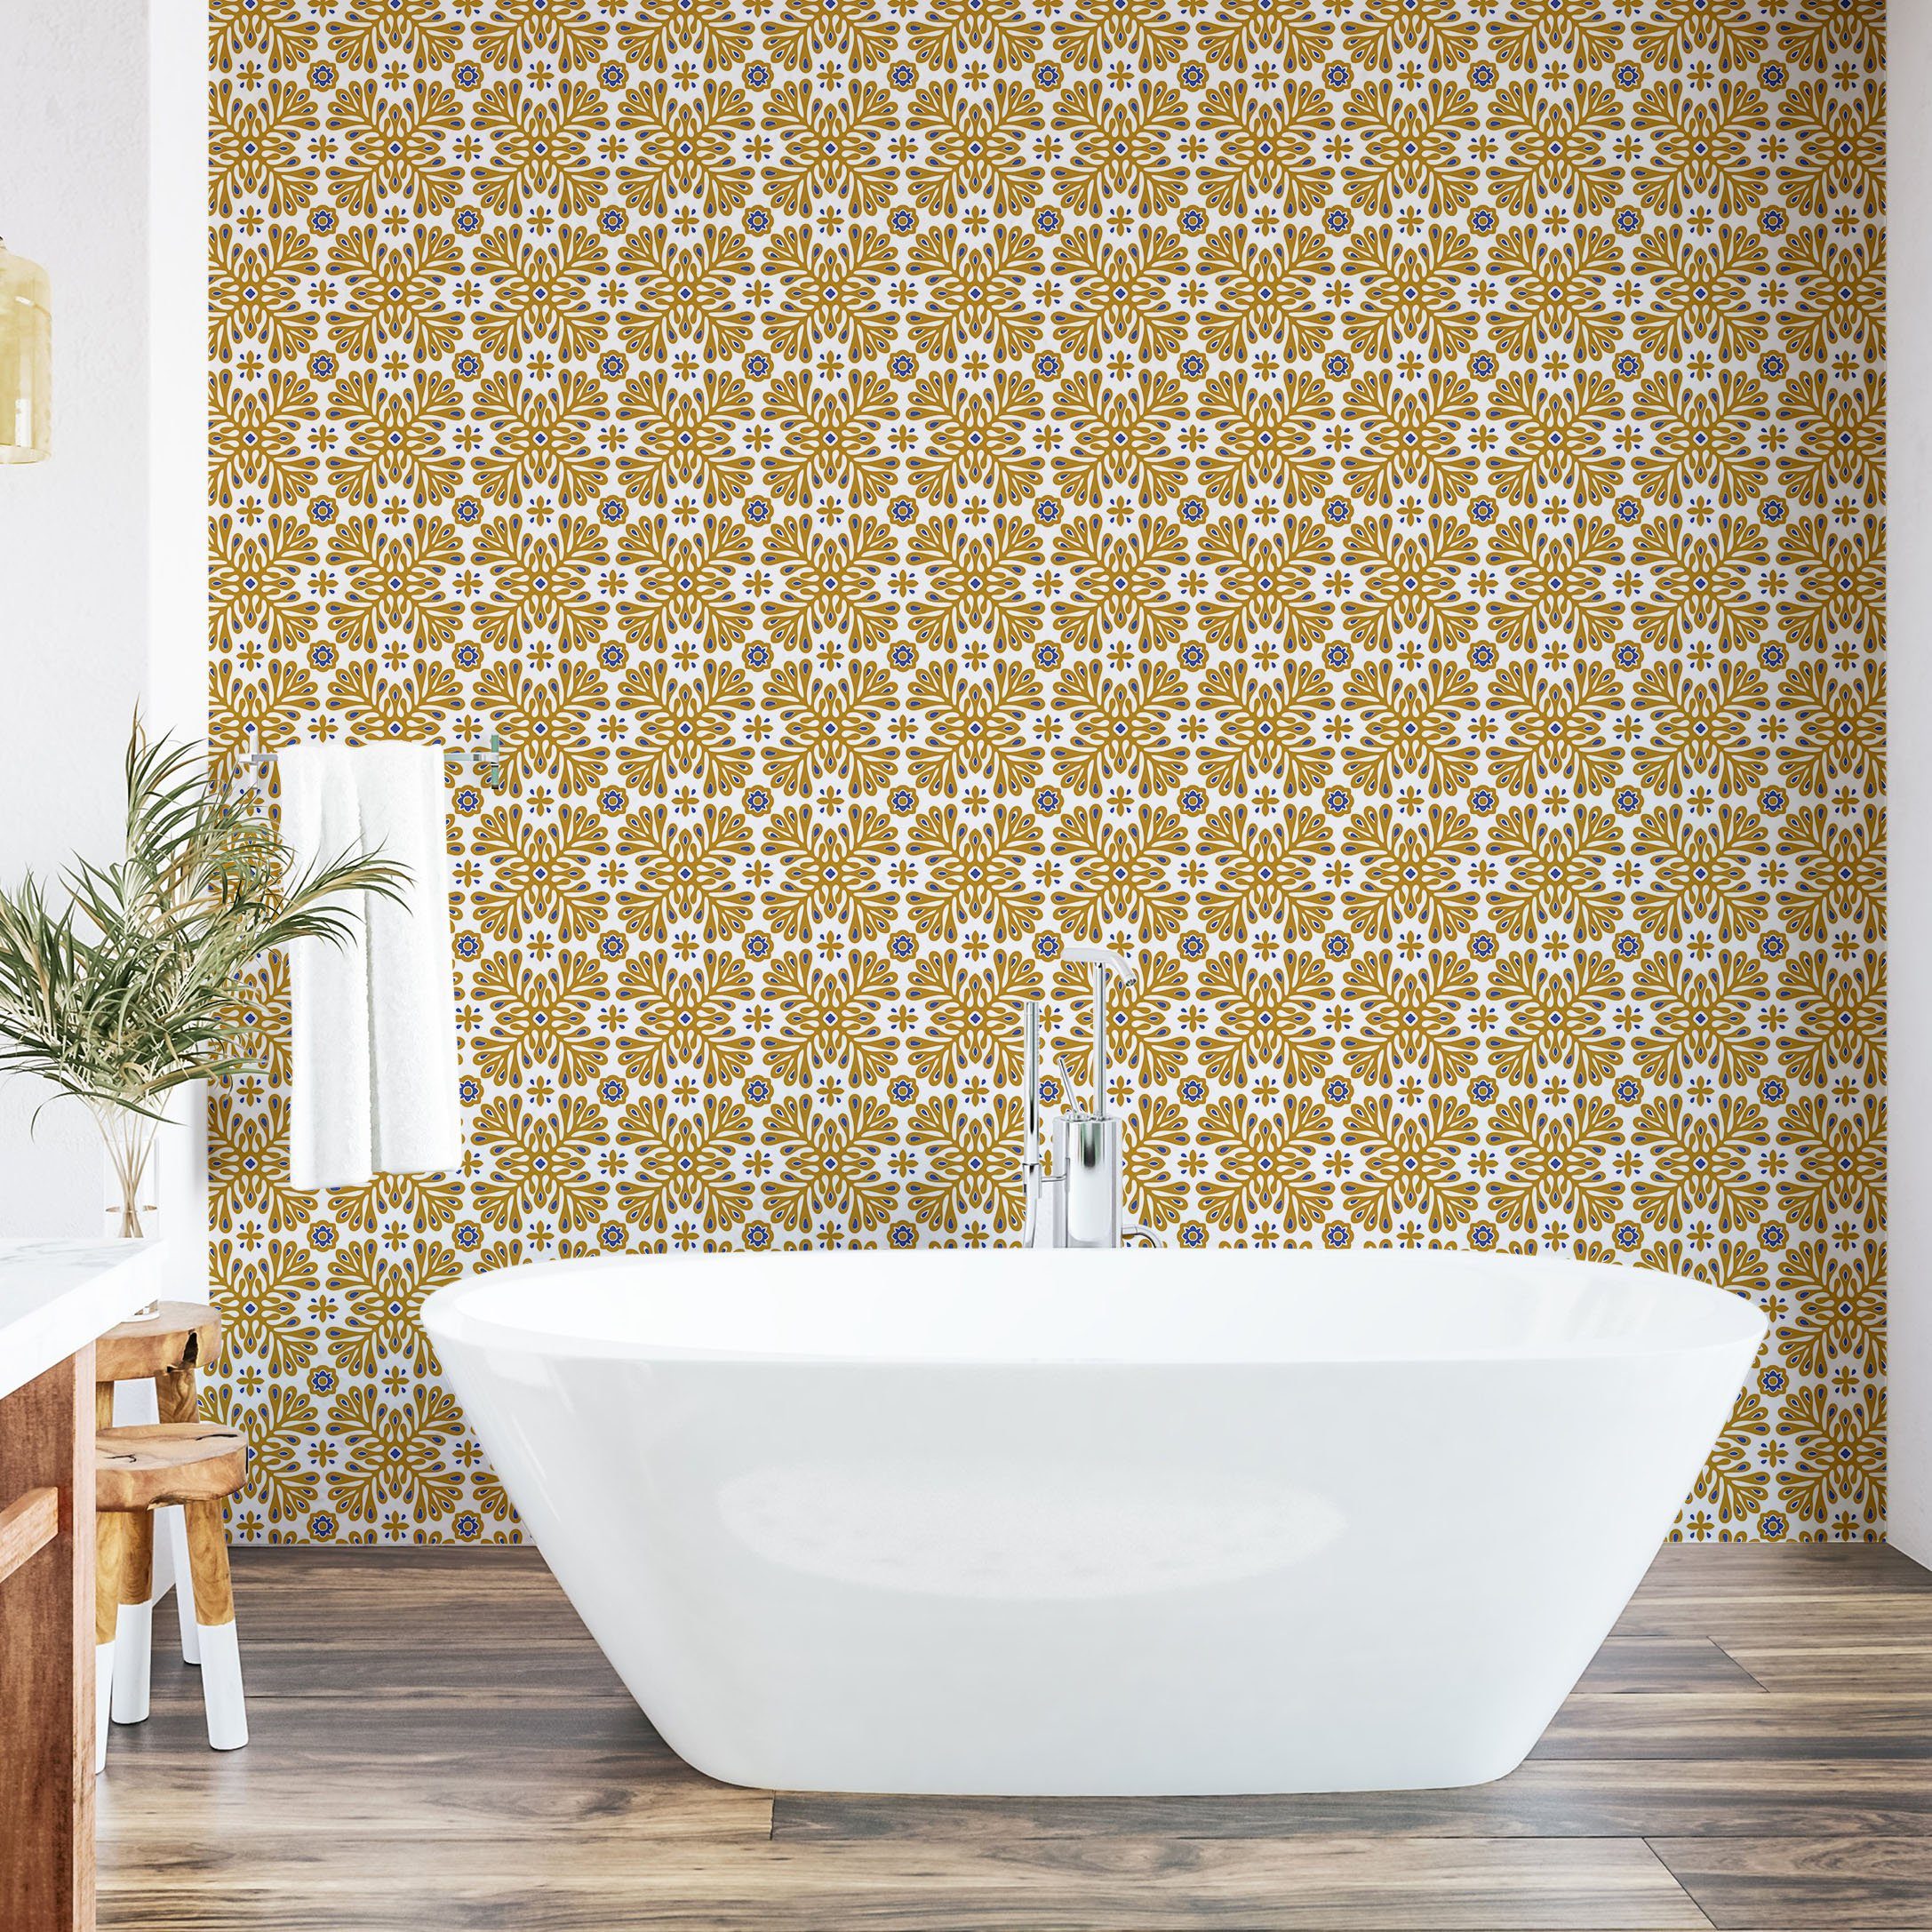 Floral Inspired Abakuhaus Küchenakzent, Wohnzimmer selbstklebendes Vinyltapete Mosaik marokkanisch